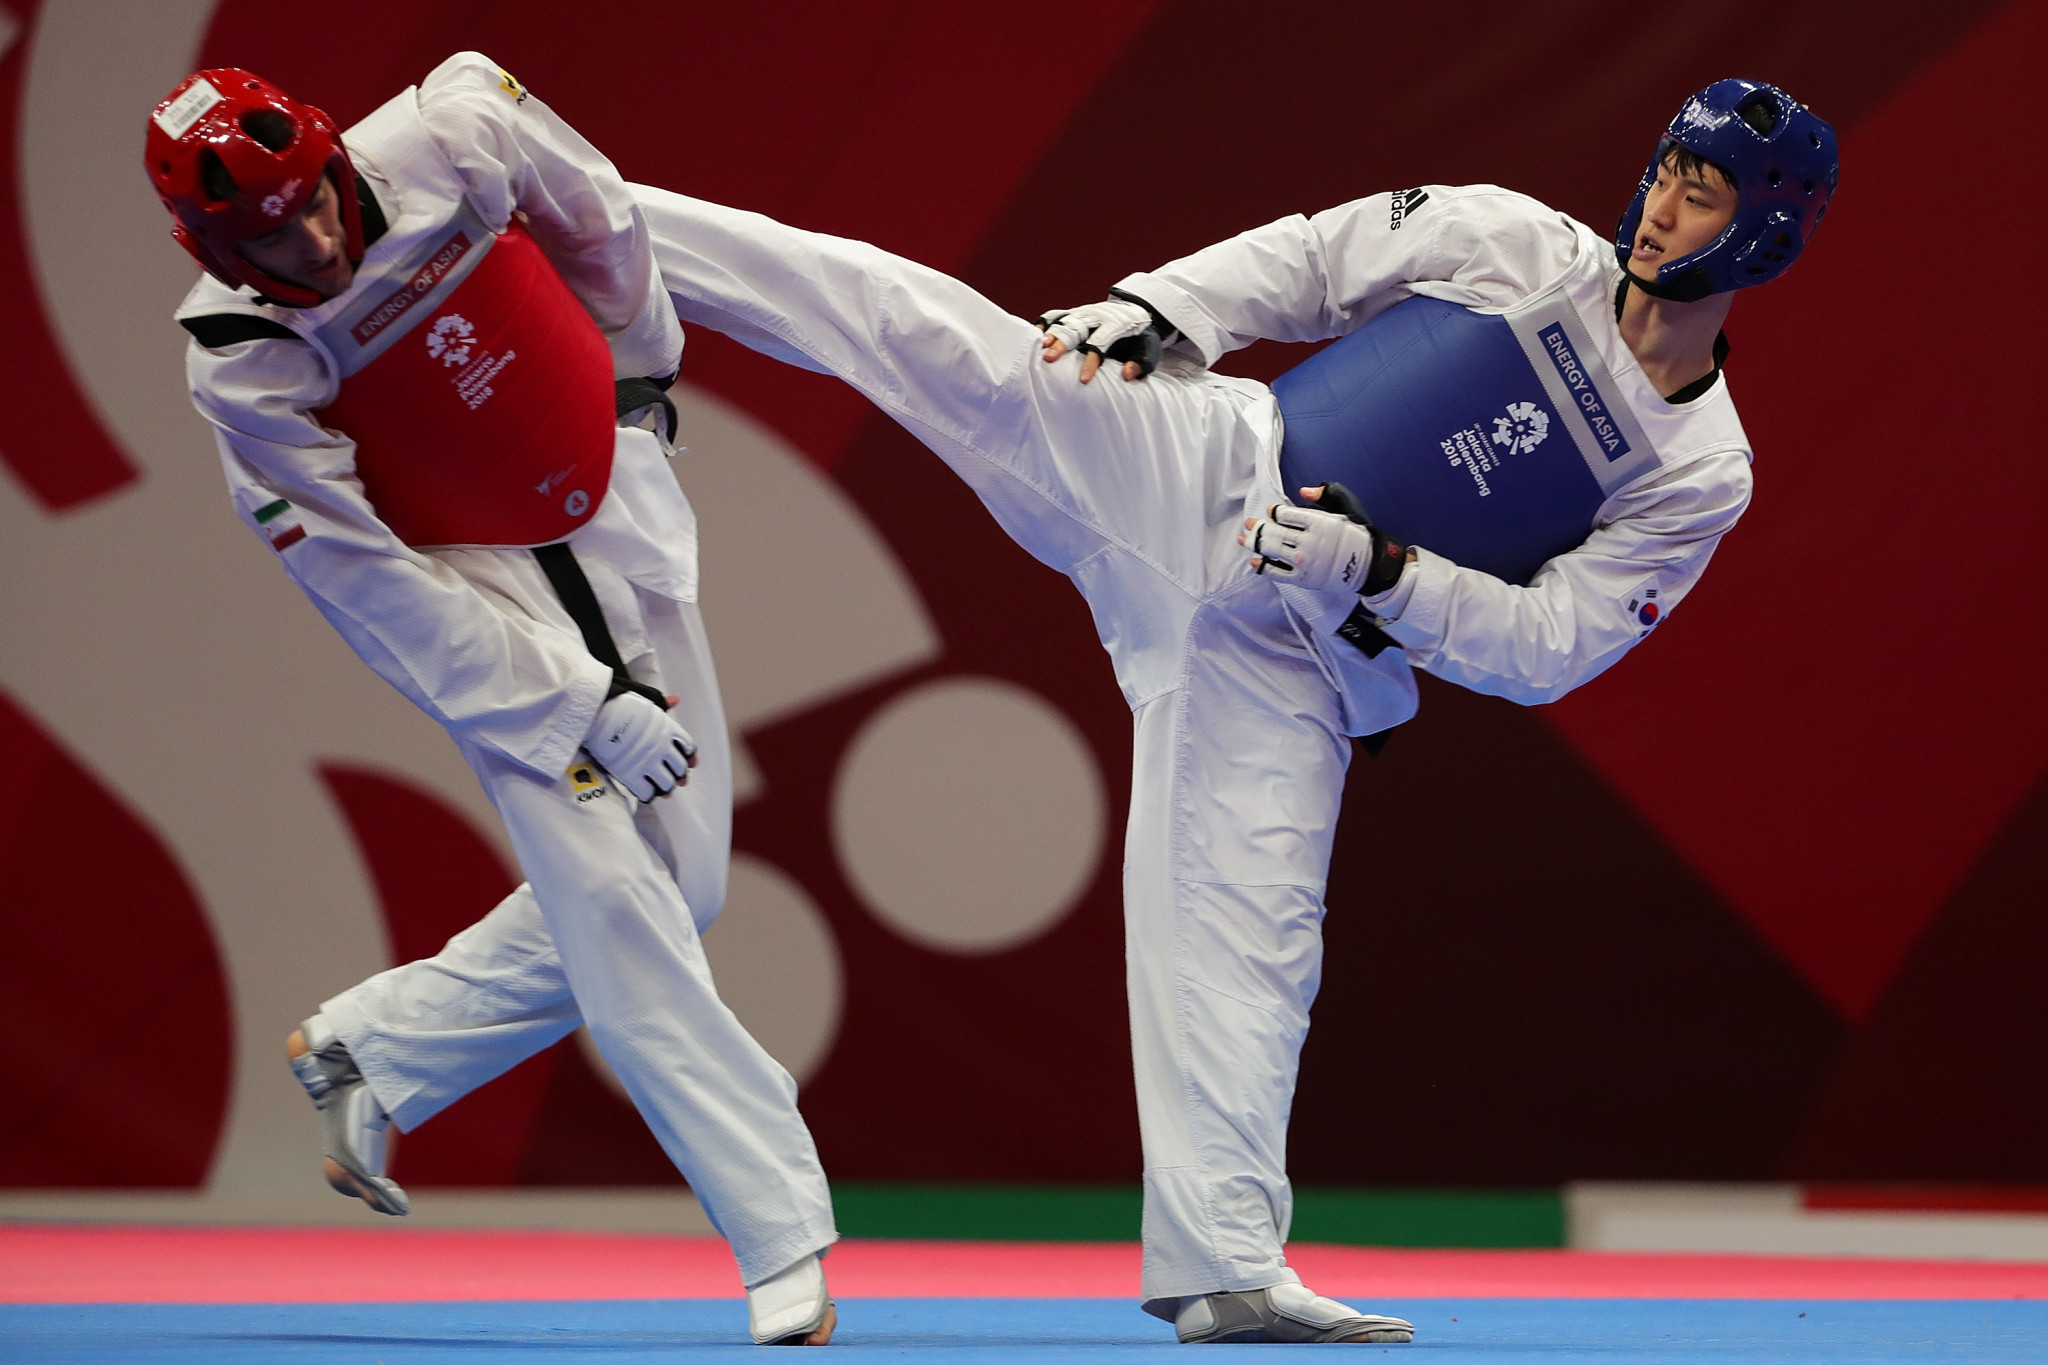 South Korea aim for second consecutive overall title at World Taekwondo Championships